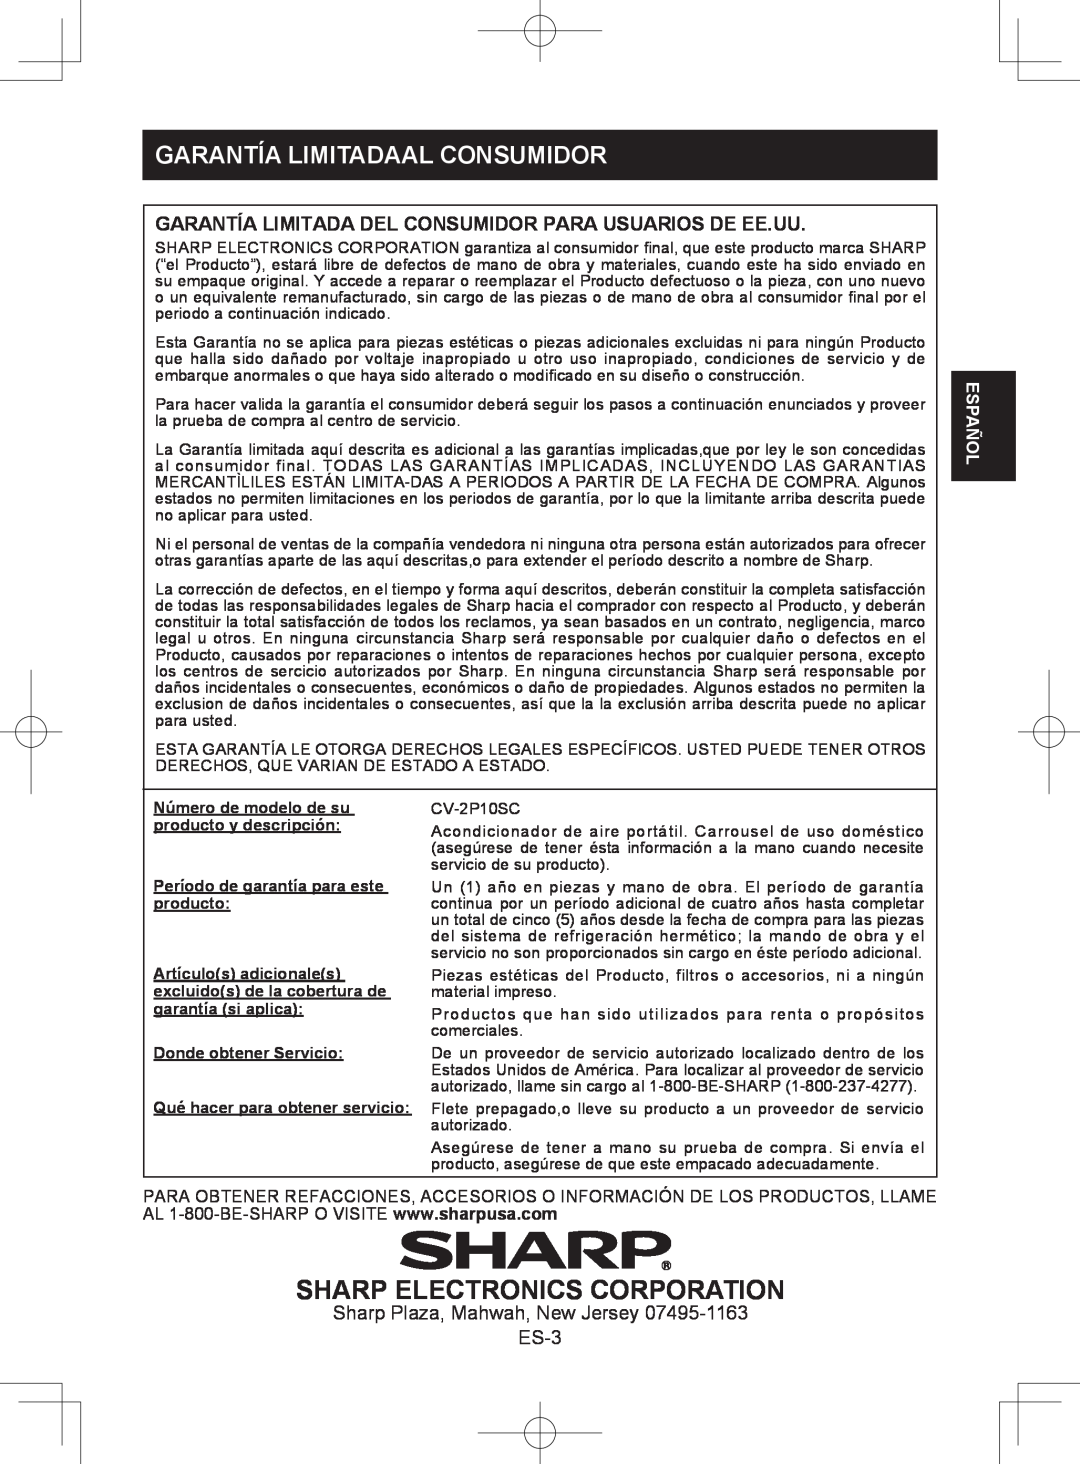 Sharp CV-2P10SC Garantía Limitadaal Consumidor, Sharp Electronics Corporation, Sharp Plaza, Mahwah, New Jersey ES-3 